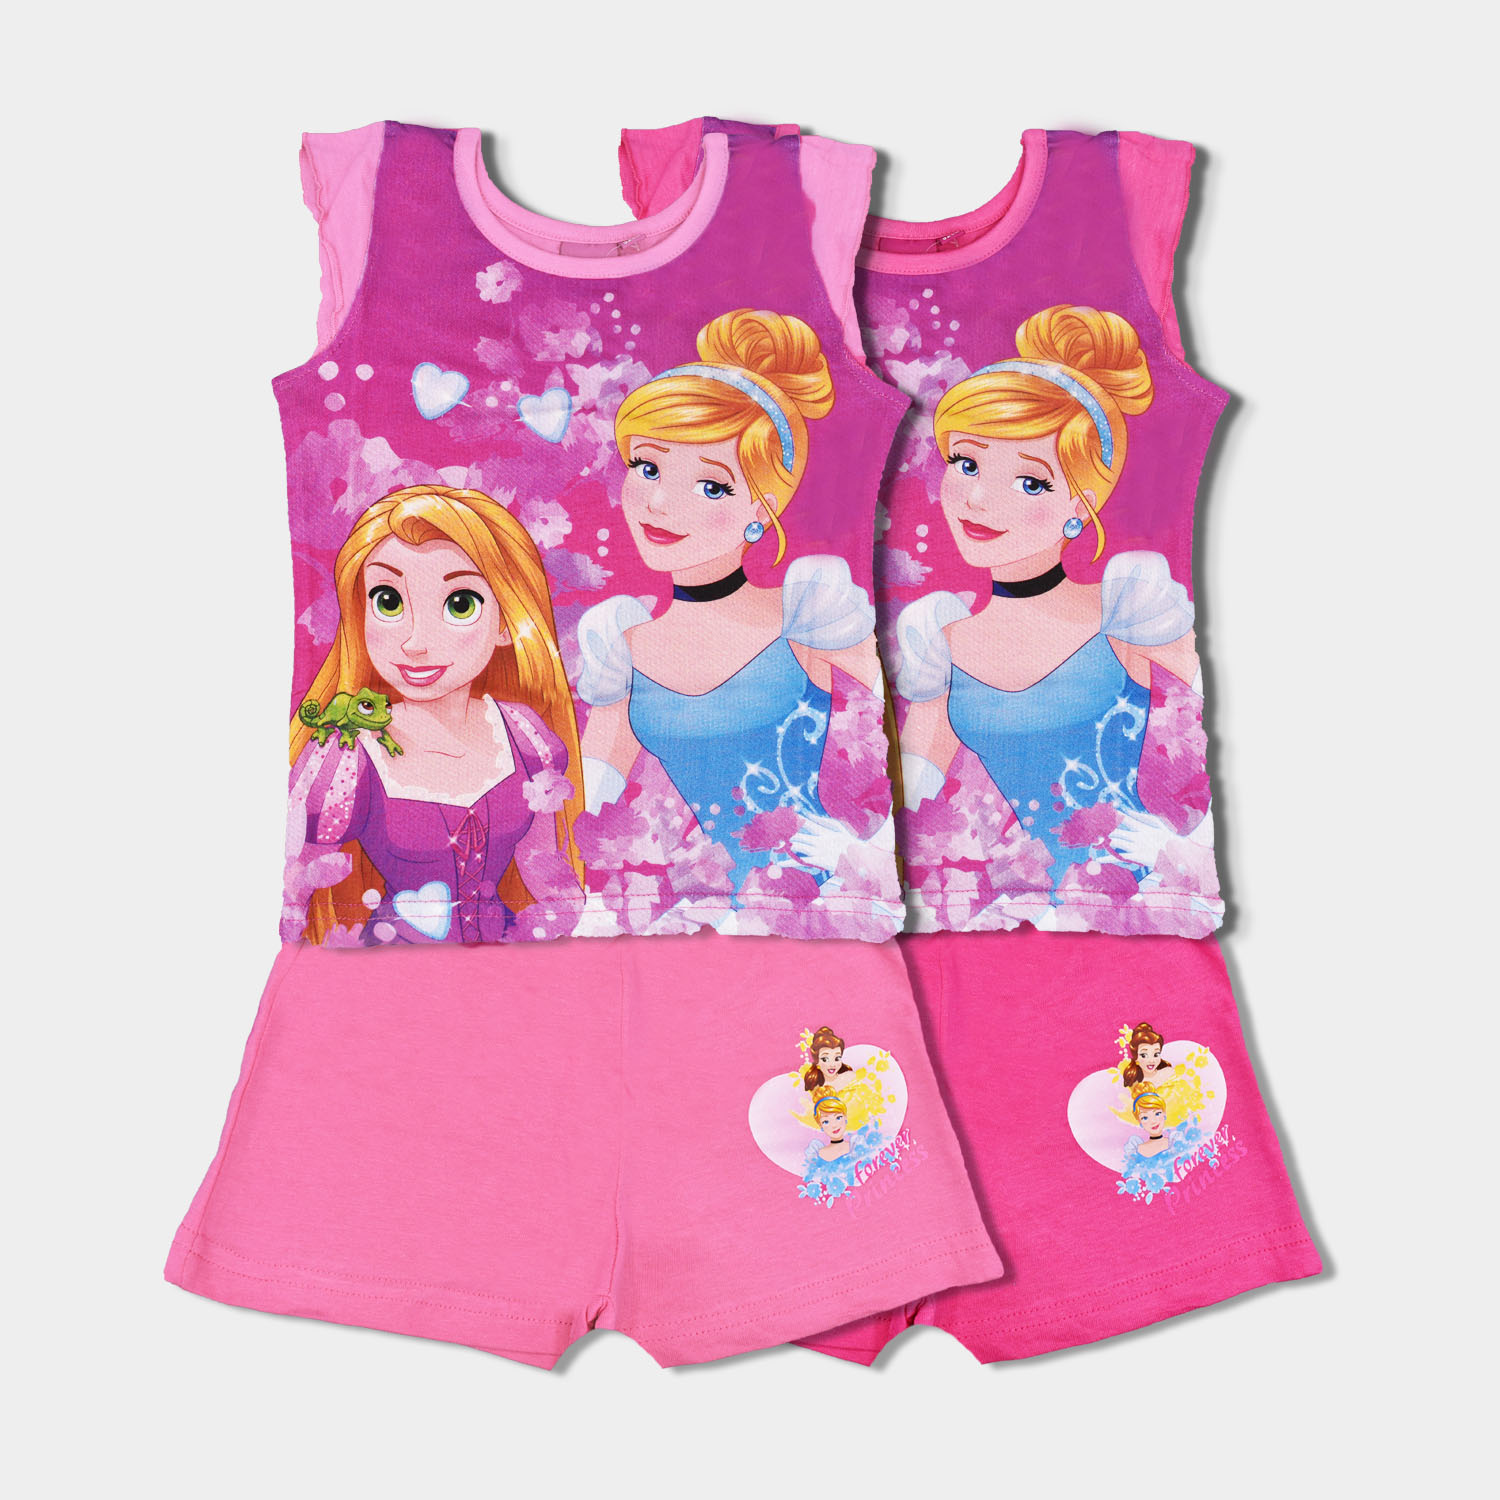 pijama infantil verano princesas disney rosa fucsia